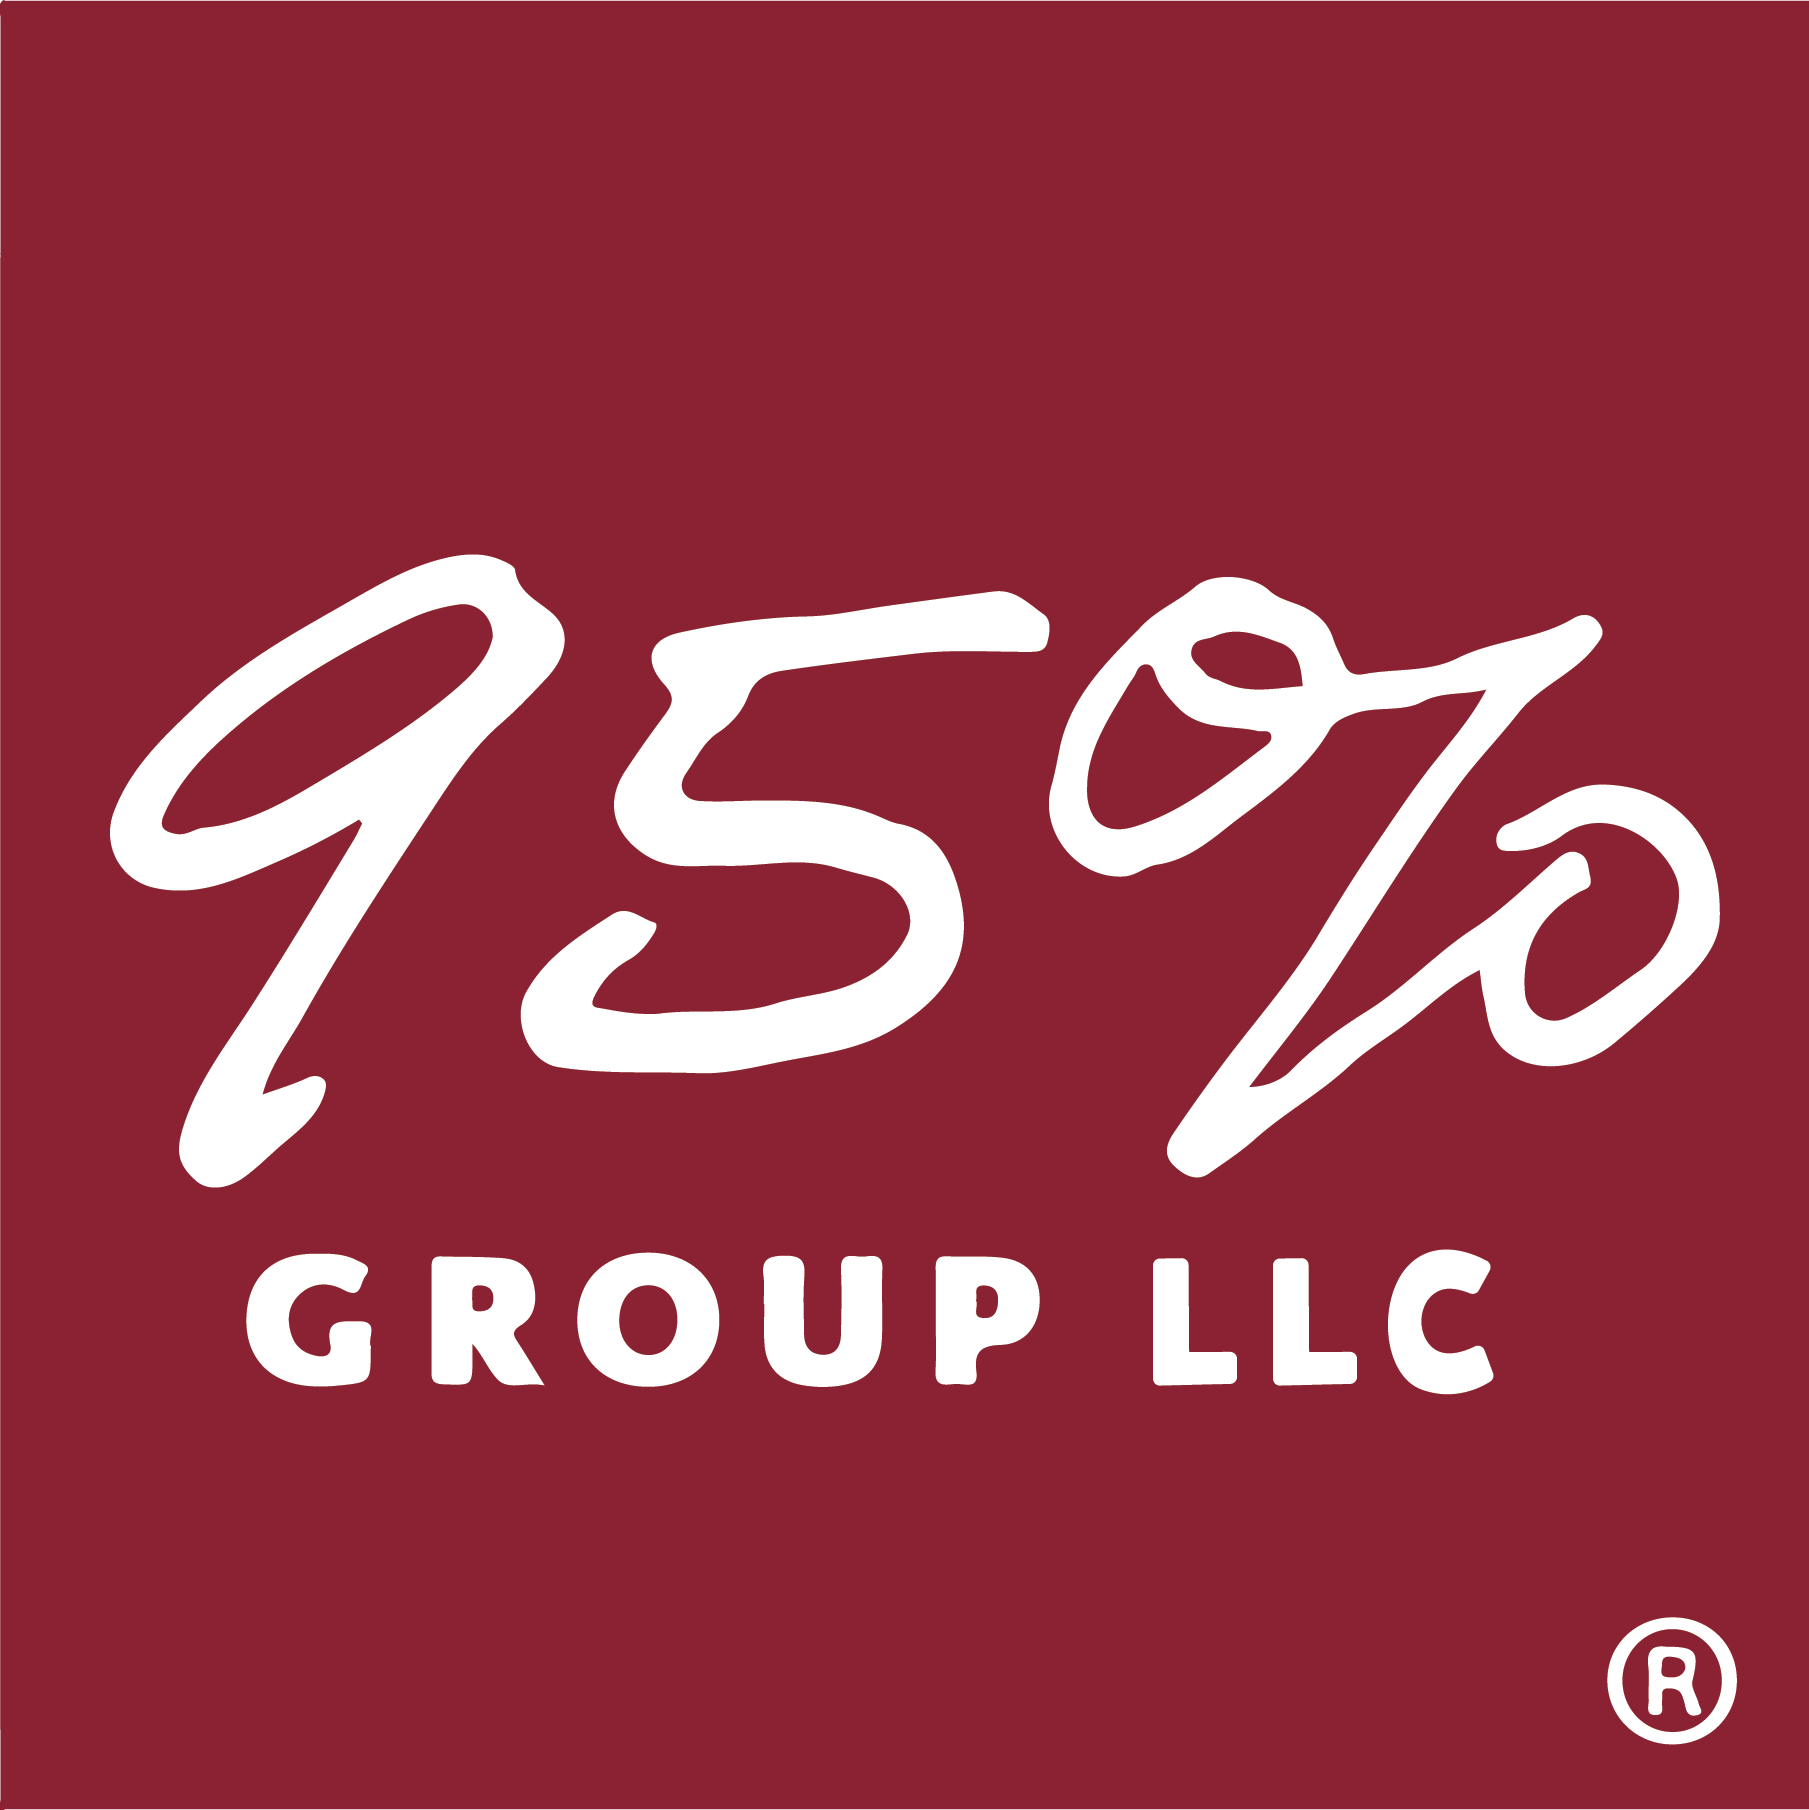 95% Group Logo